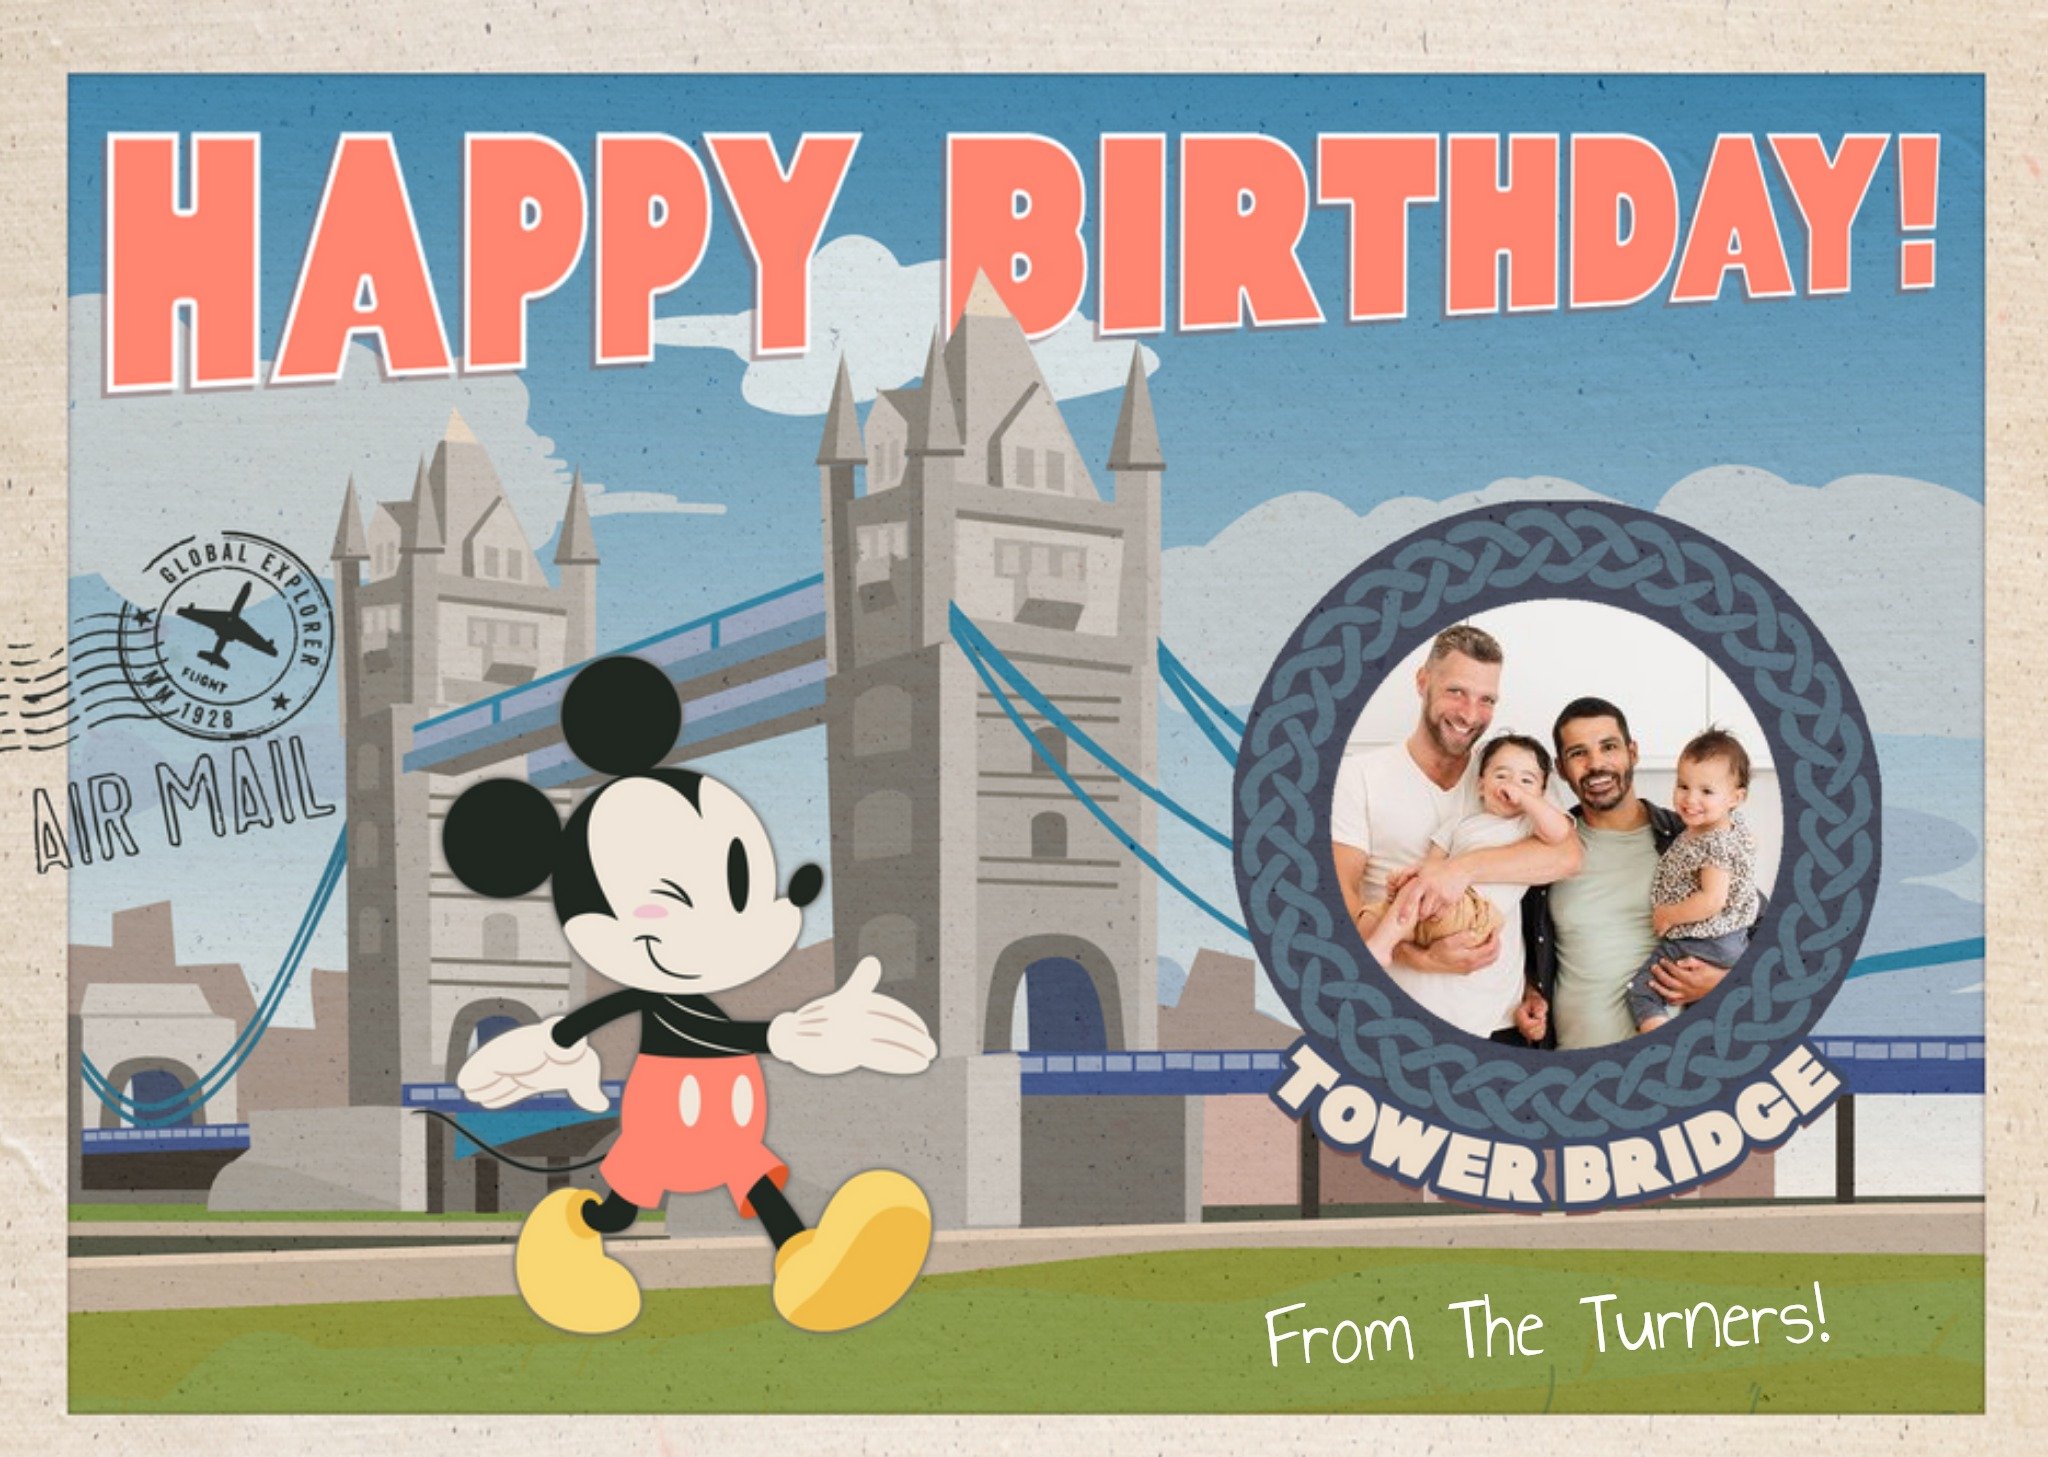 Mickey Mouse Tower Bridge London Photo Upload Birthday Card By Disney Ecard